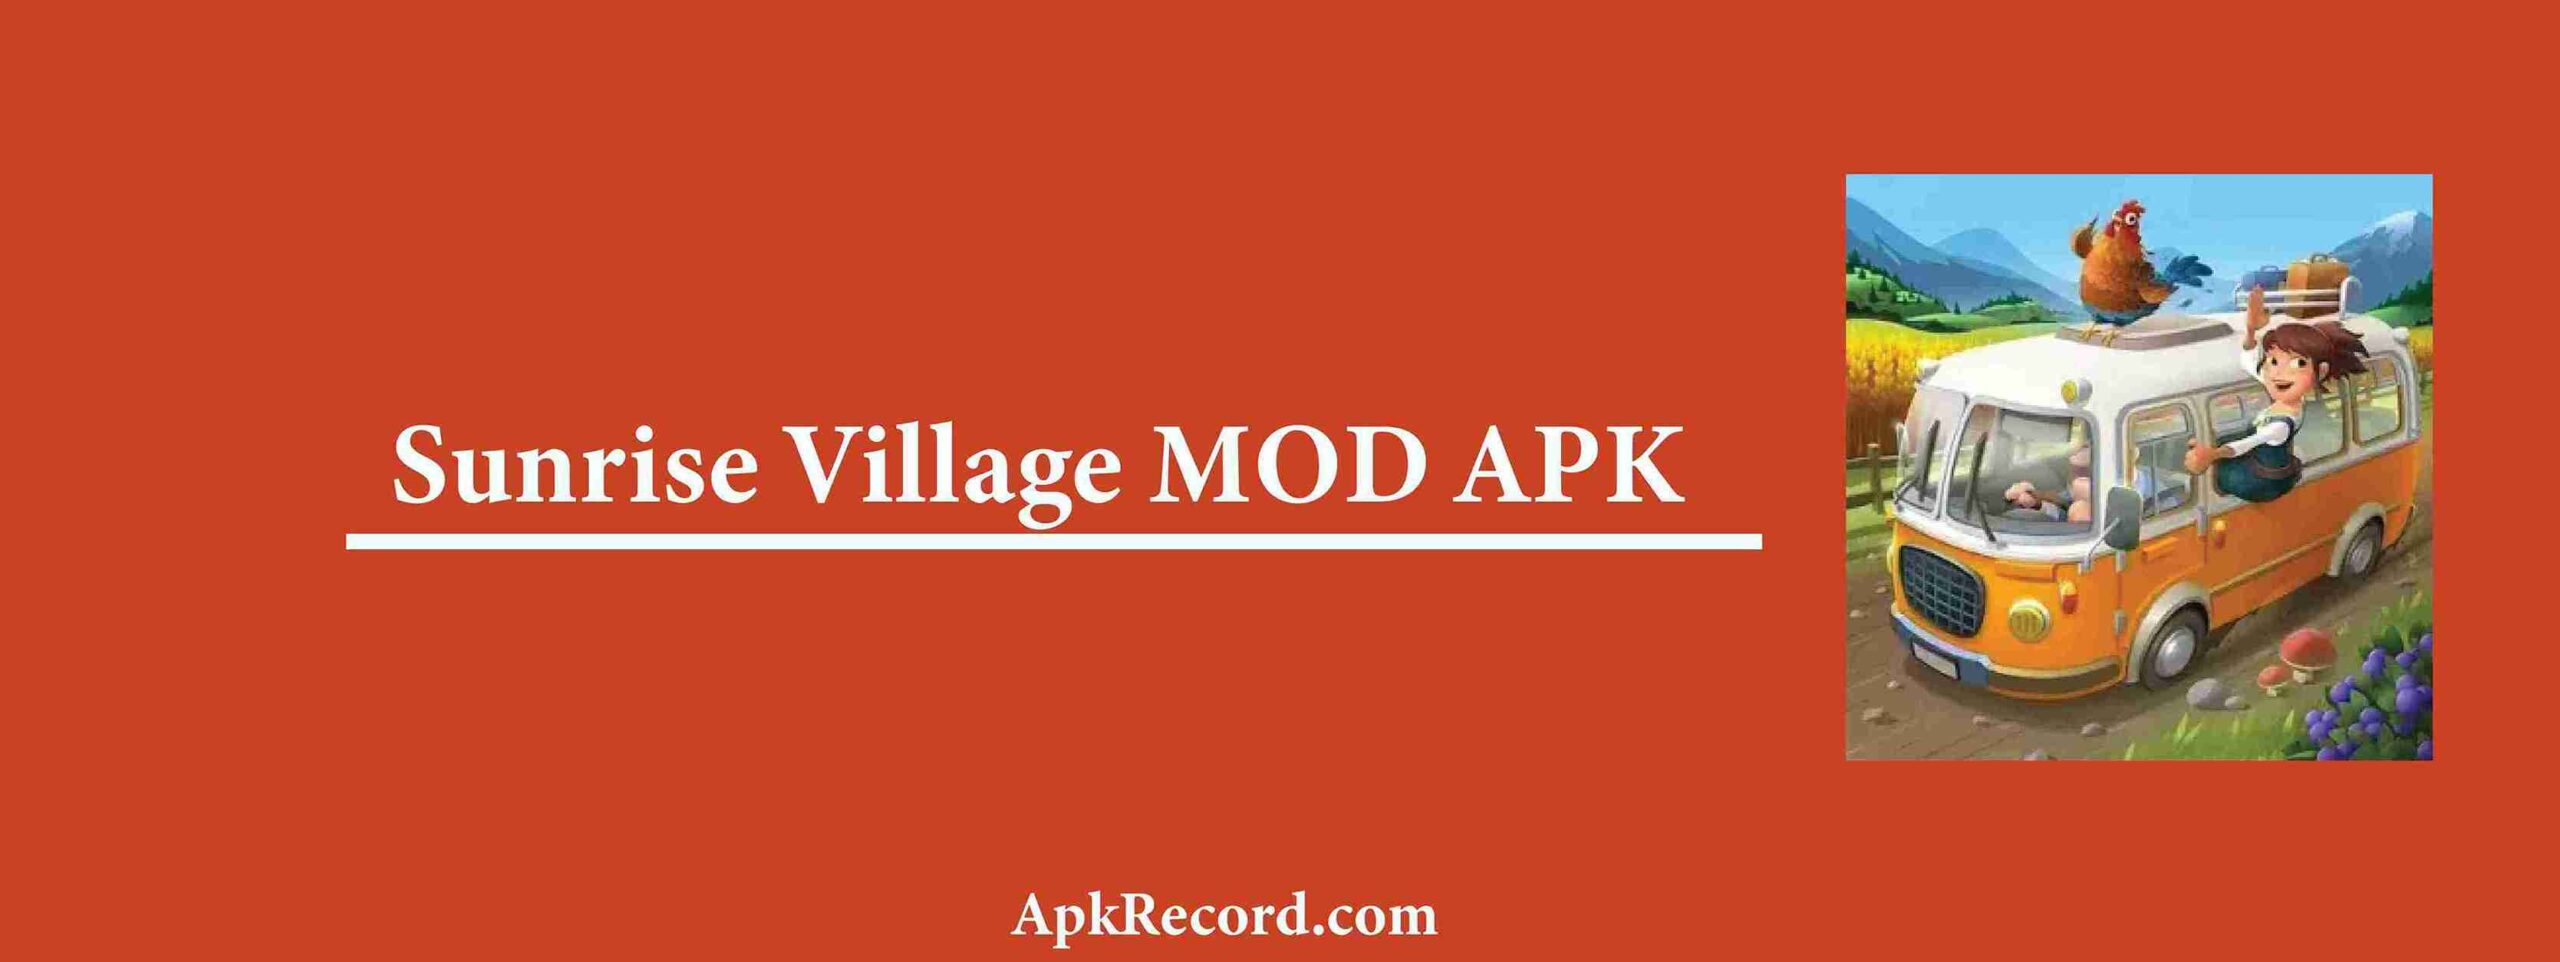 Sunrise Village MOD APK V1.101.56 